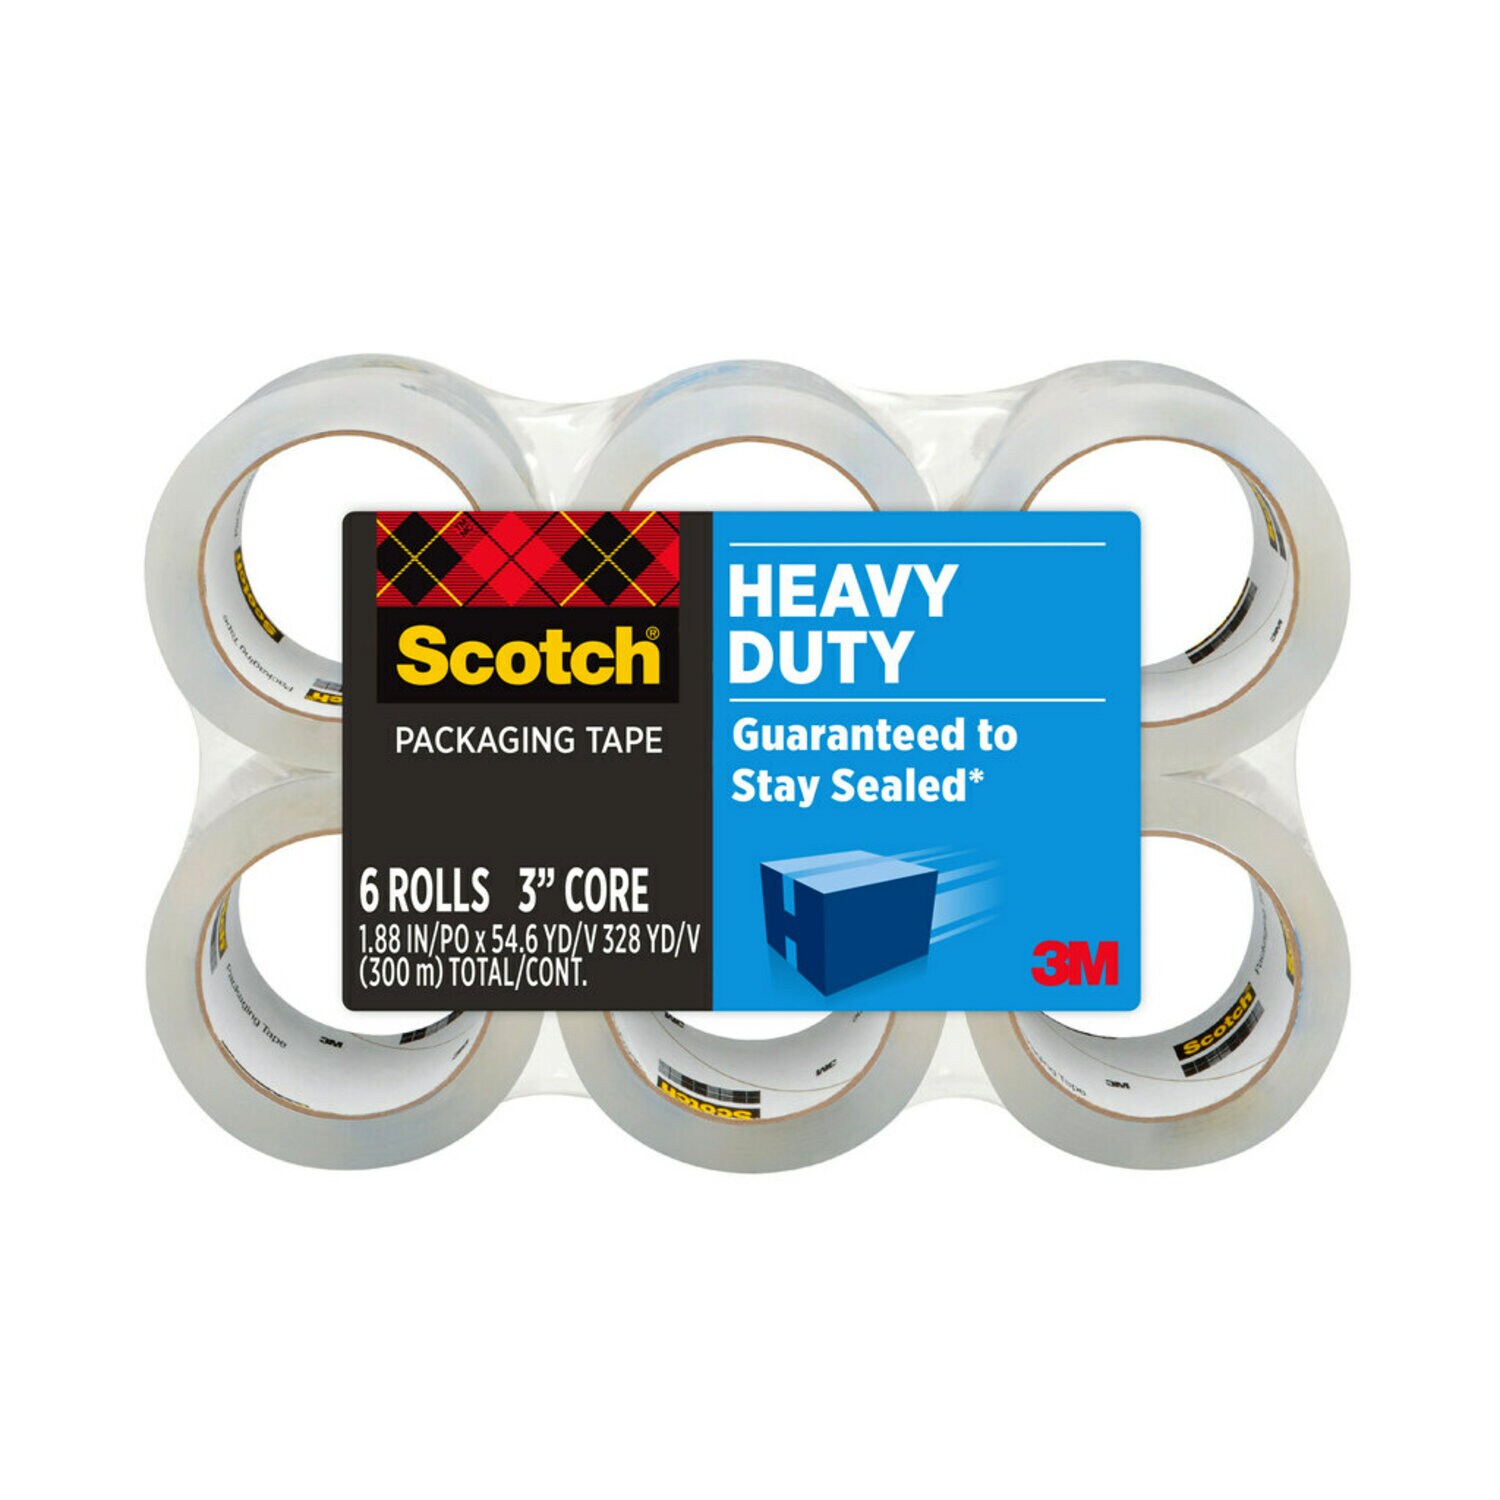 7100160503 - Scotch Packaging Tape 3850-6-EF, 1.88 in x 54.6 yd (48mm x 50 m) Heavy Duty Shipping, 6 Pack